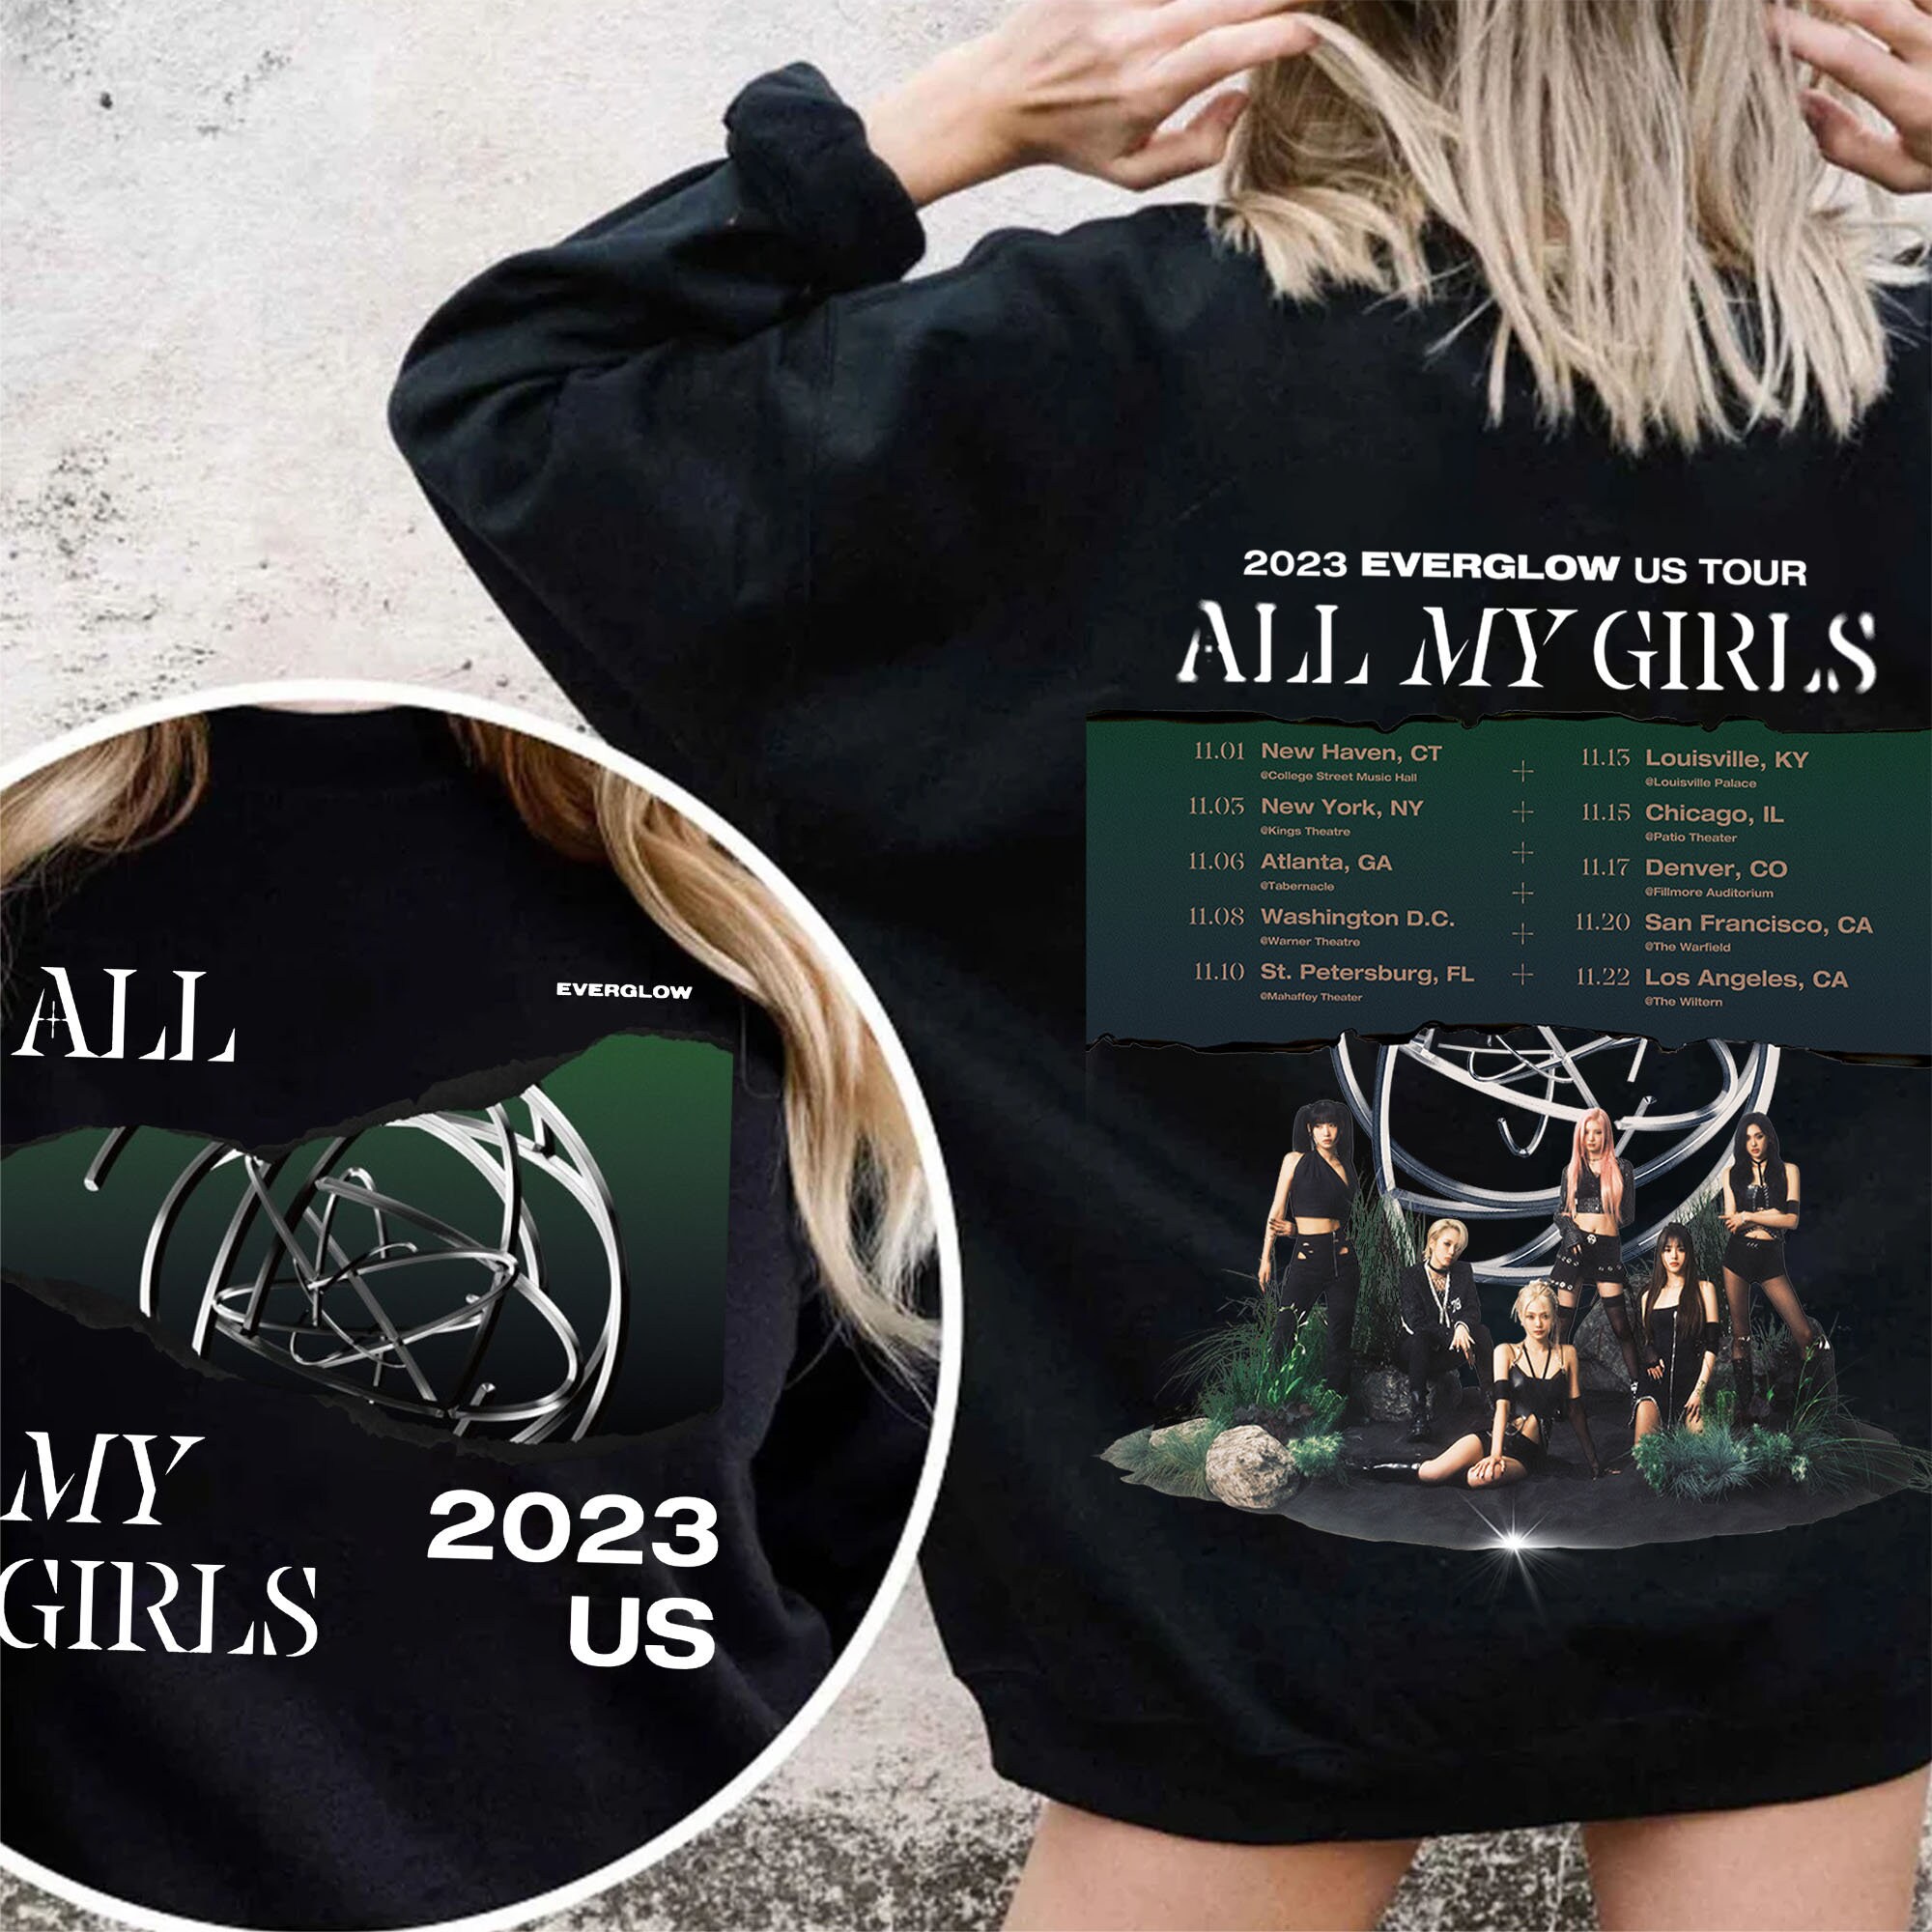 Everglow 2023 All My Girls US Tour Merch, ALl My Girls 2023 US Tour Dates  Shirt, Everglow All My Girls Album Shirt - teejeep